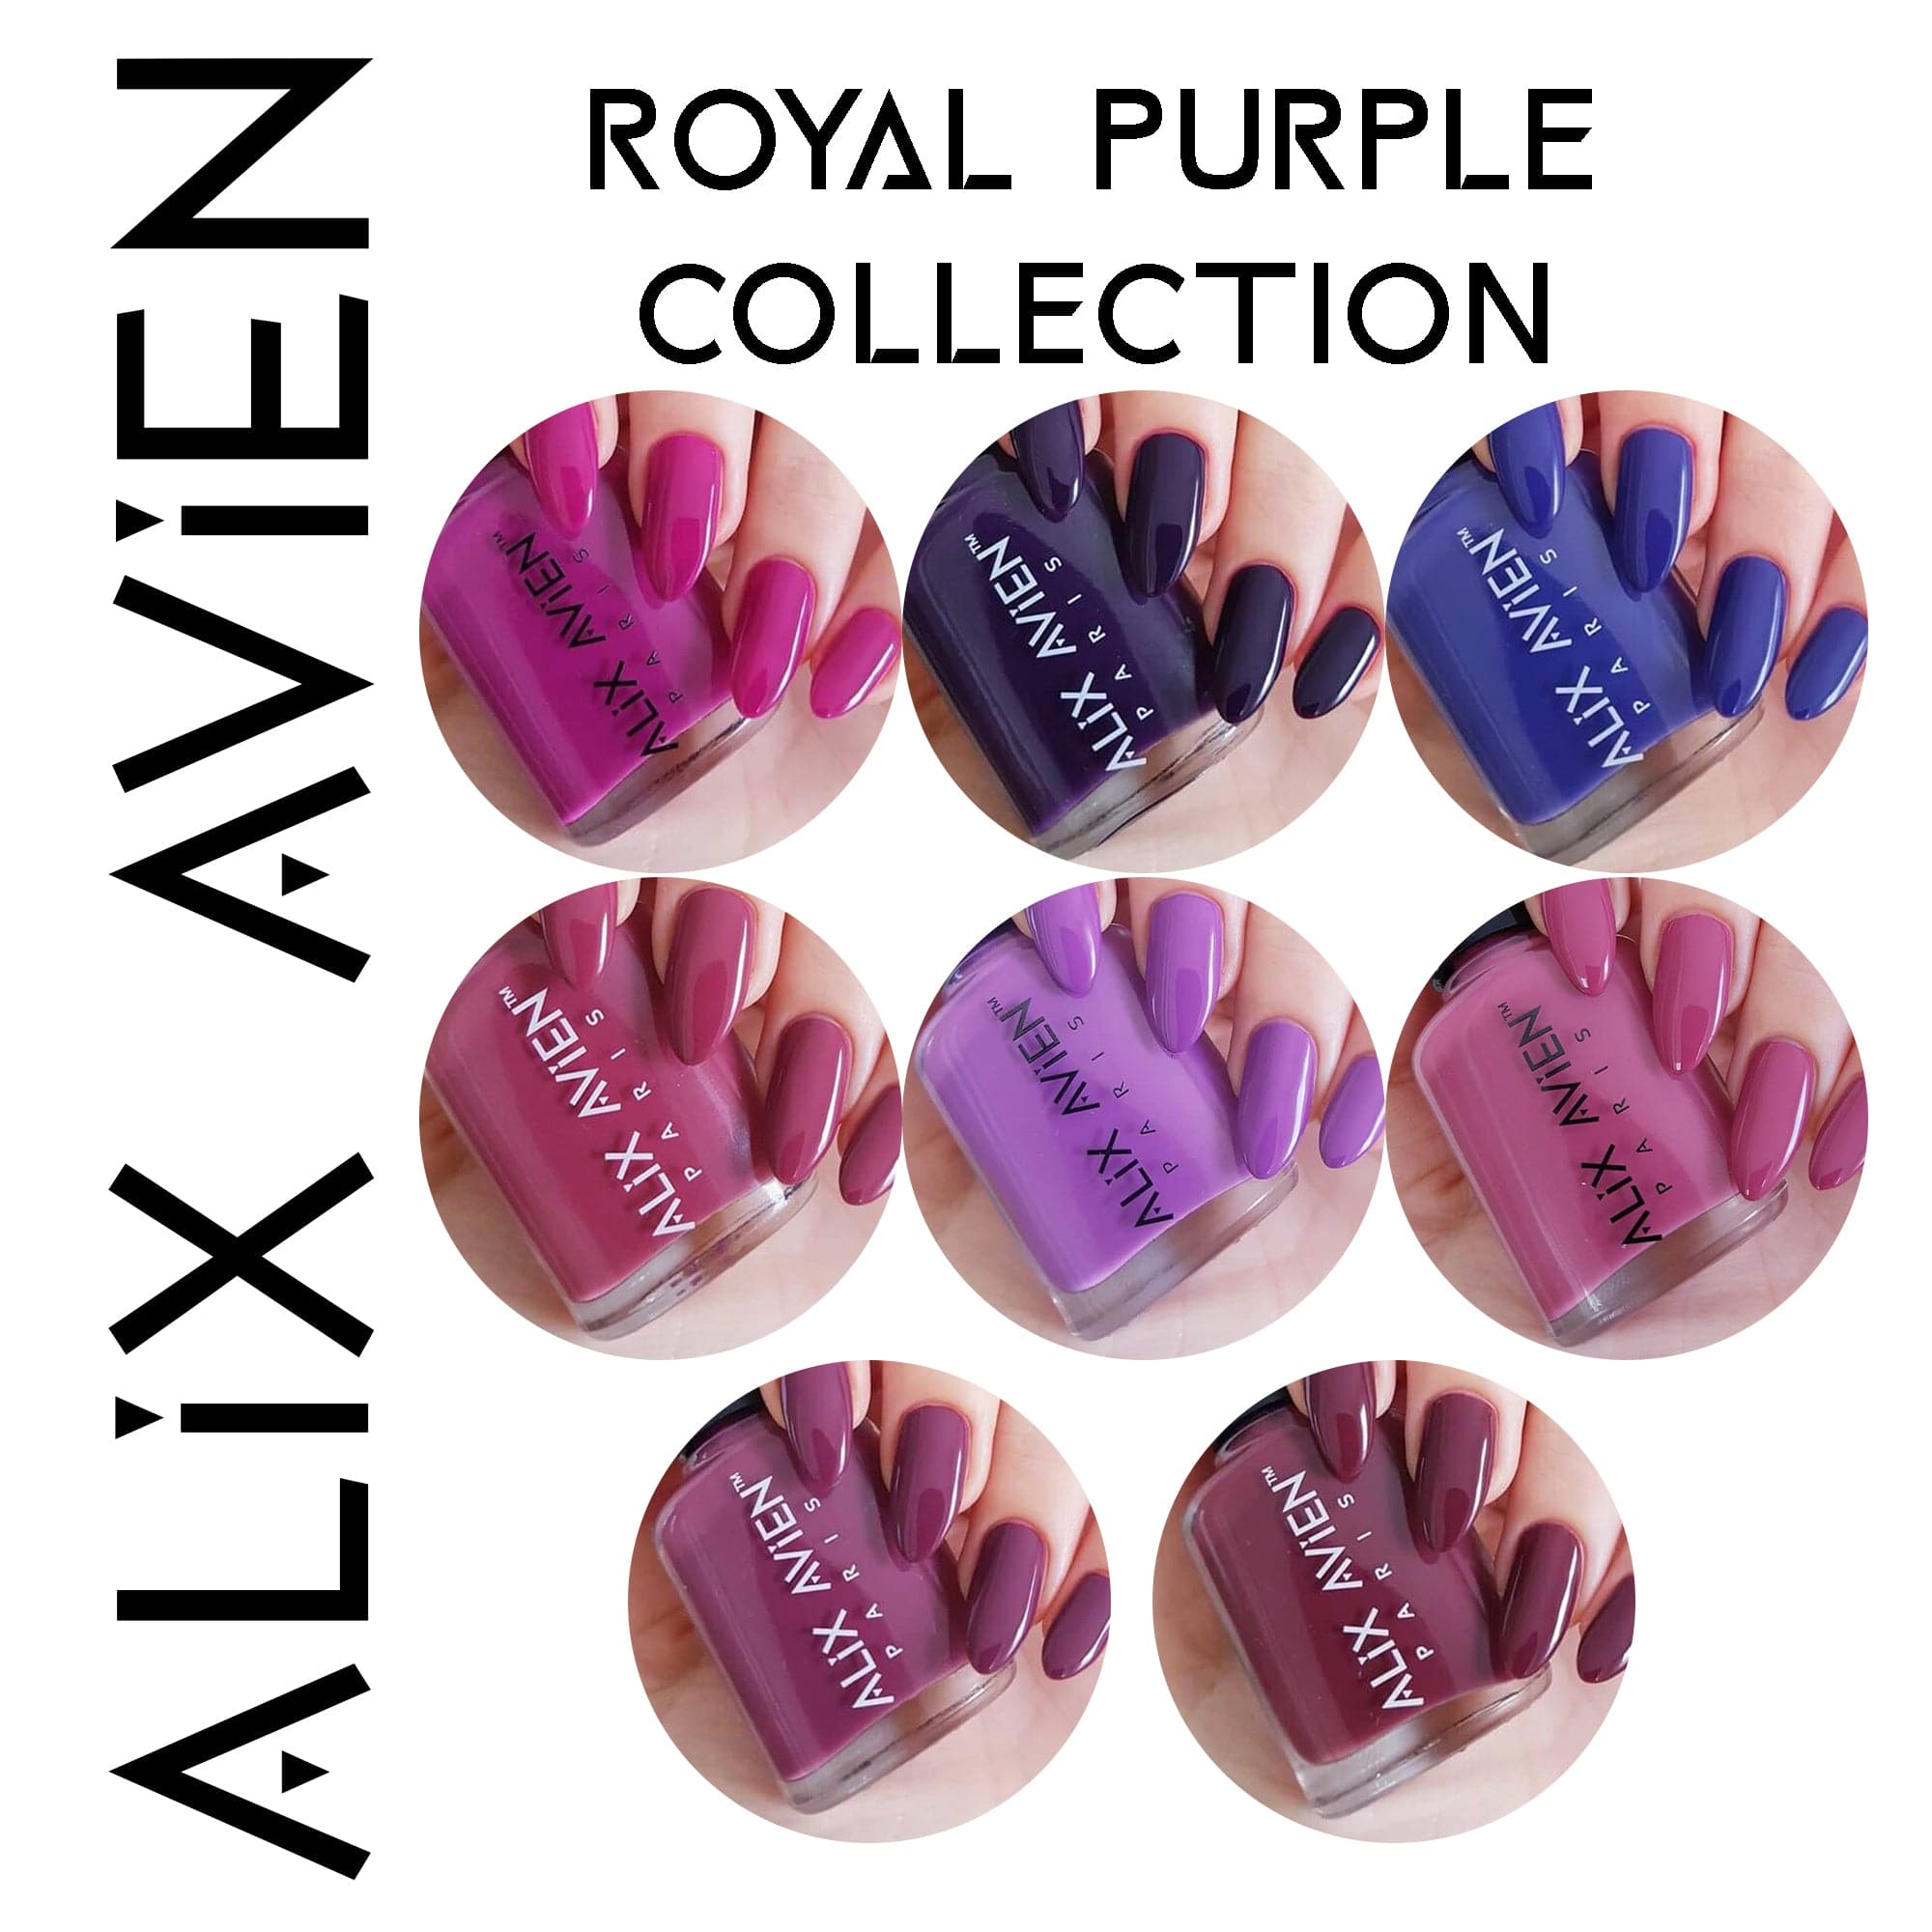 Alix Avien - Nail Polish No.76 (Perfectly Purple) - Eson Direct